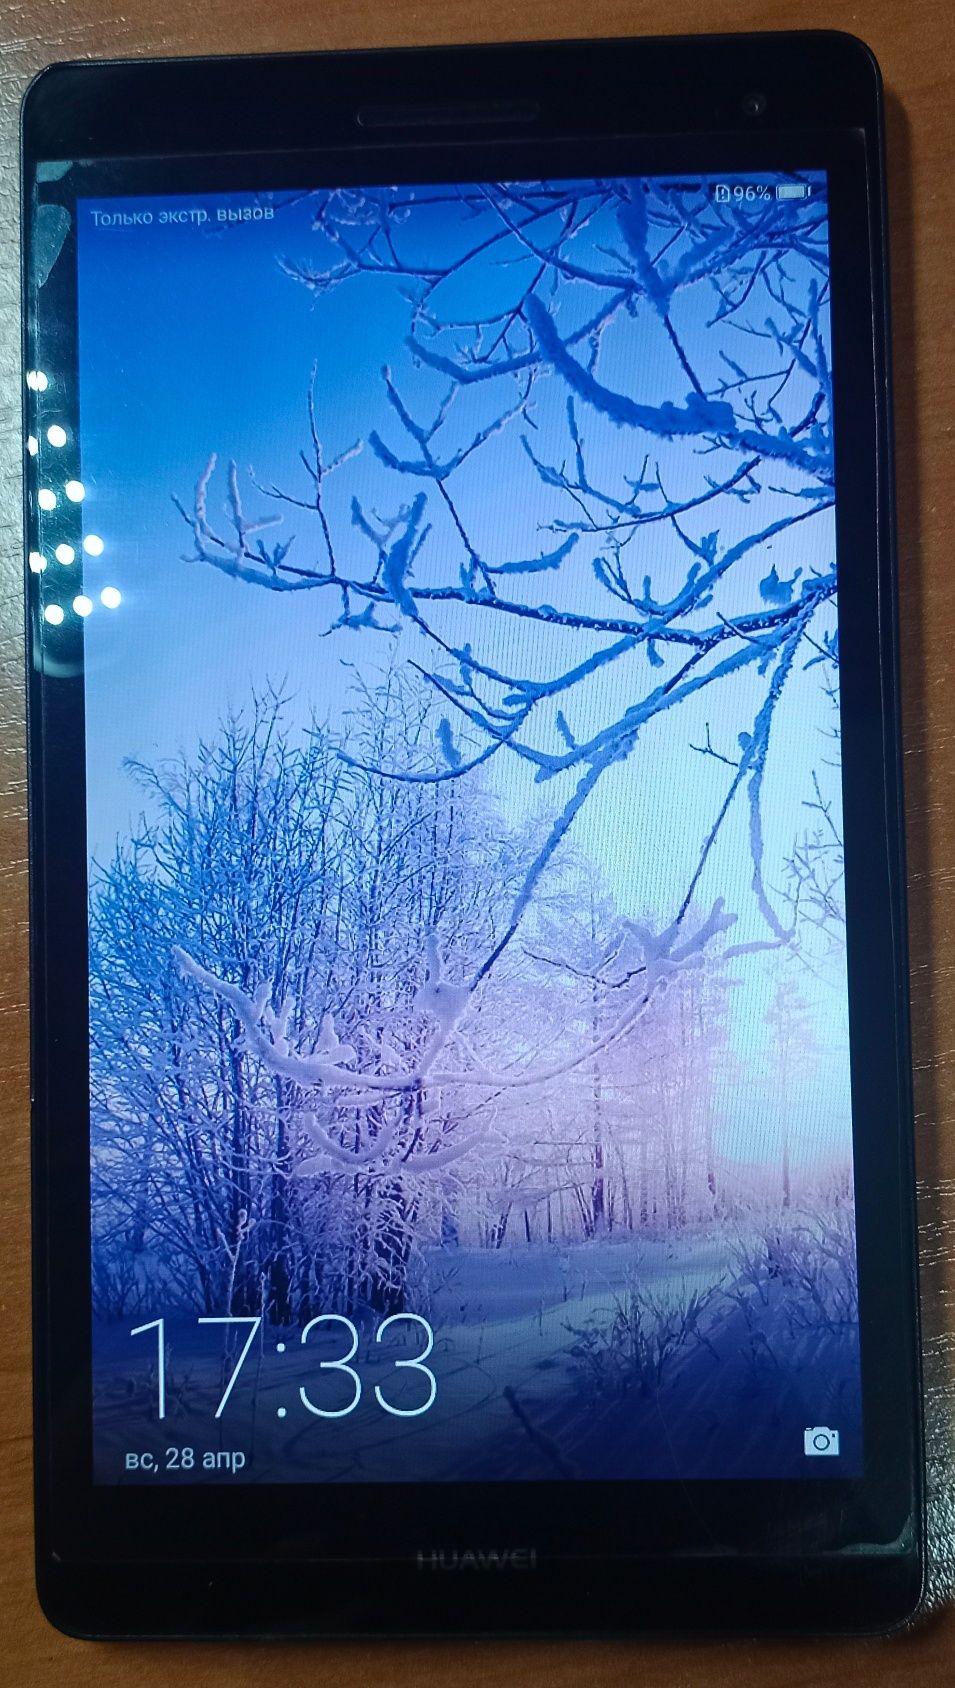 Huawei MediaPad T3 7. 3G, 8 GB